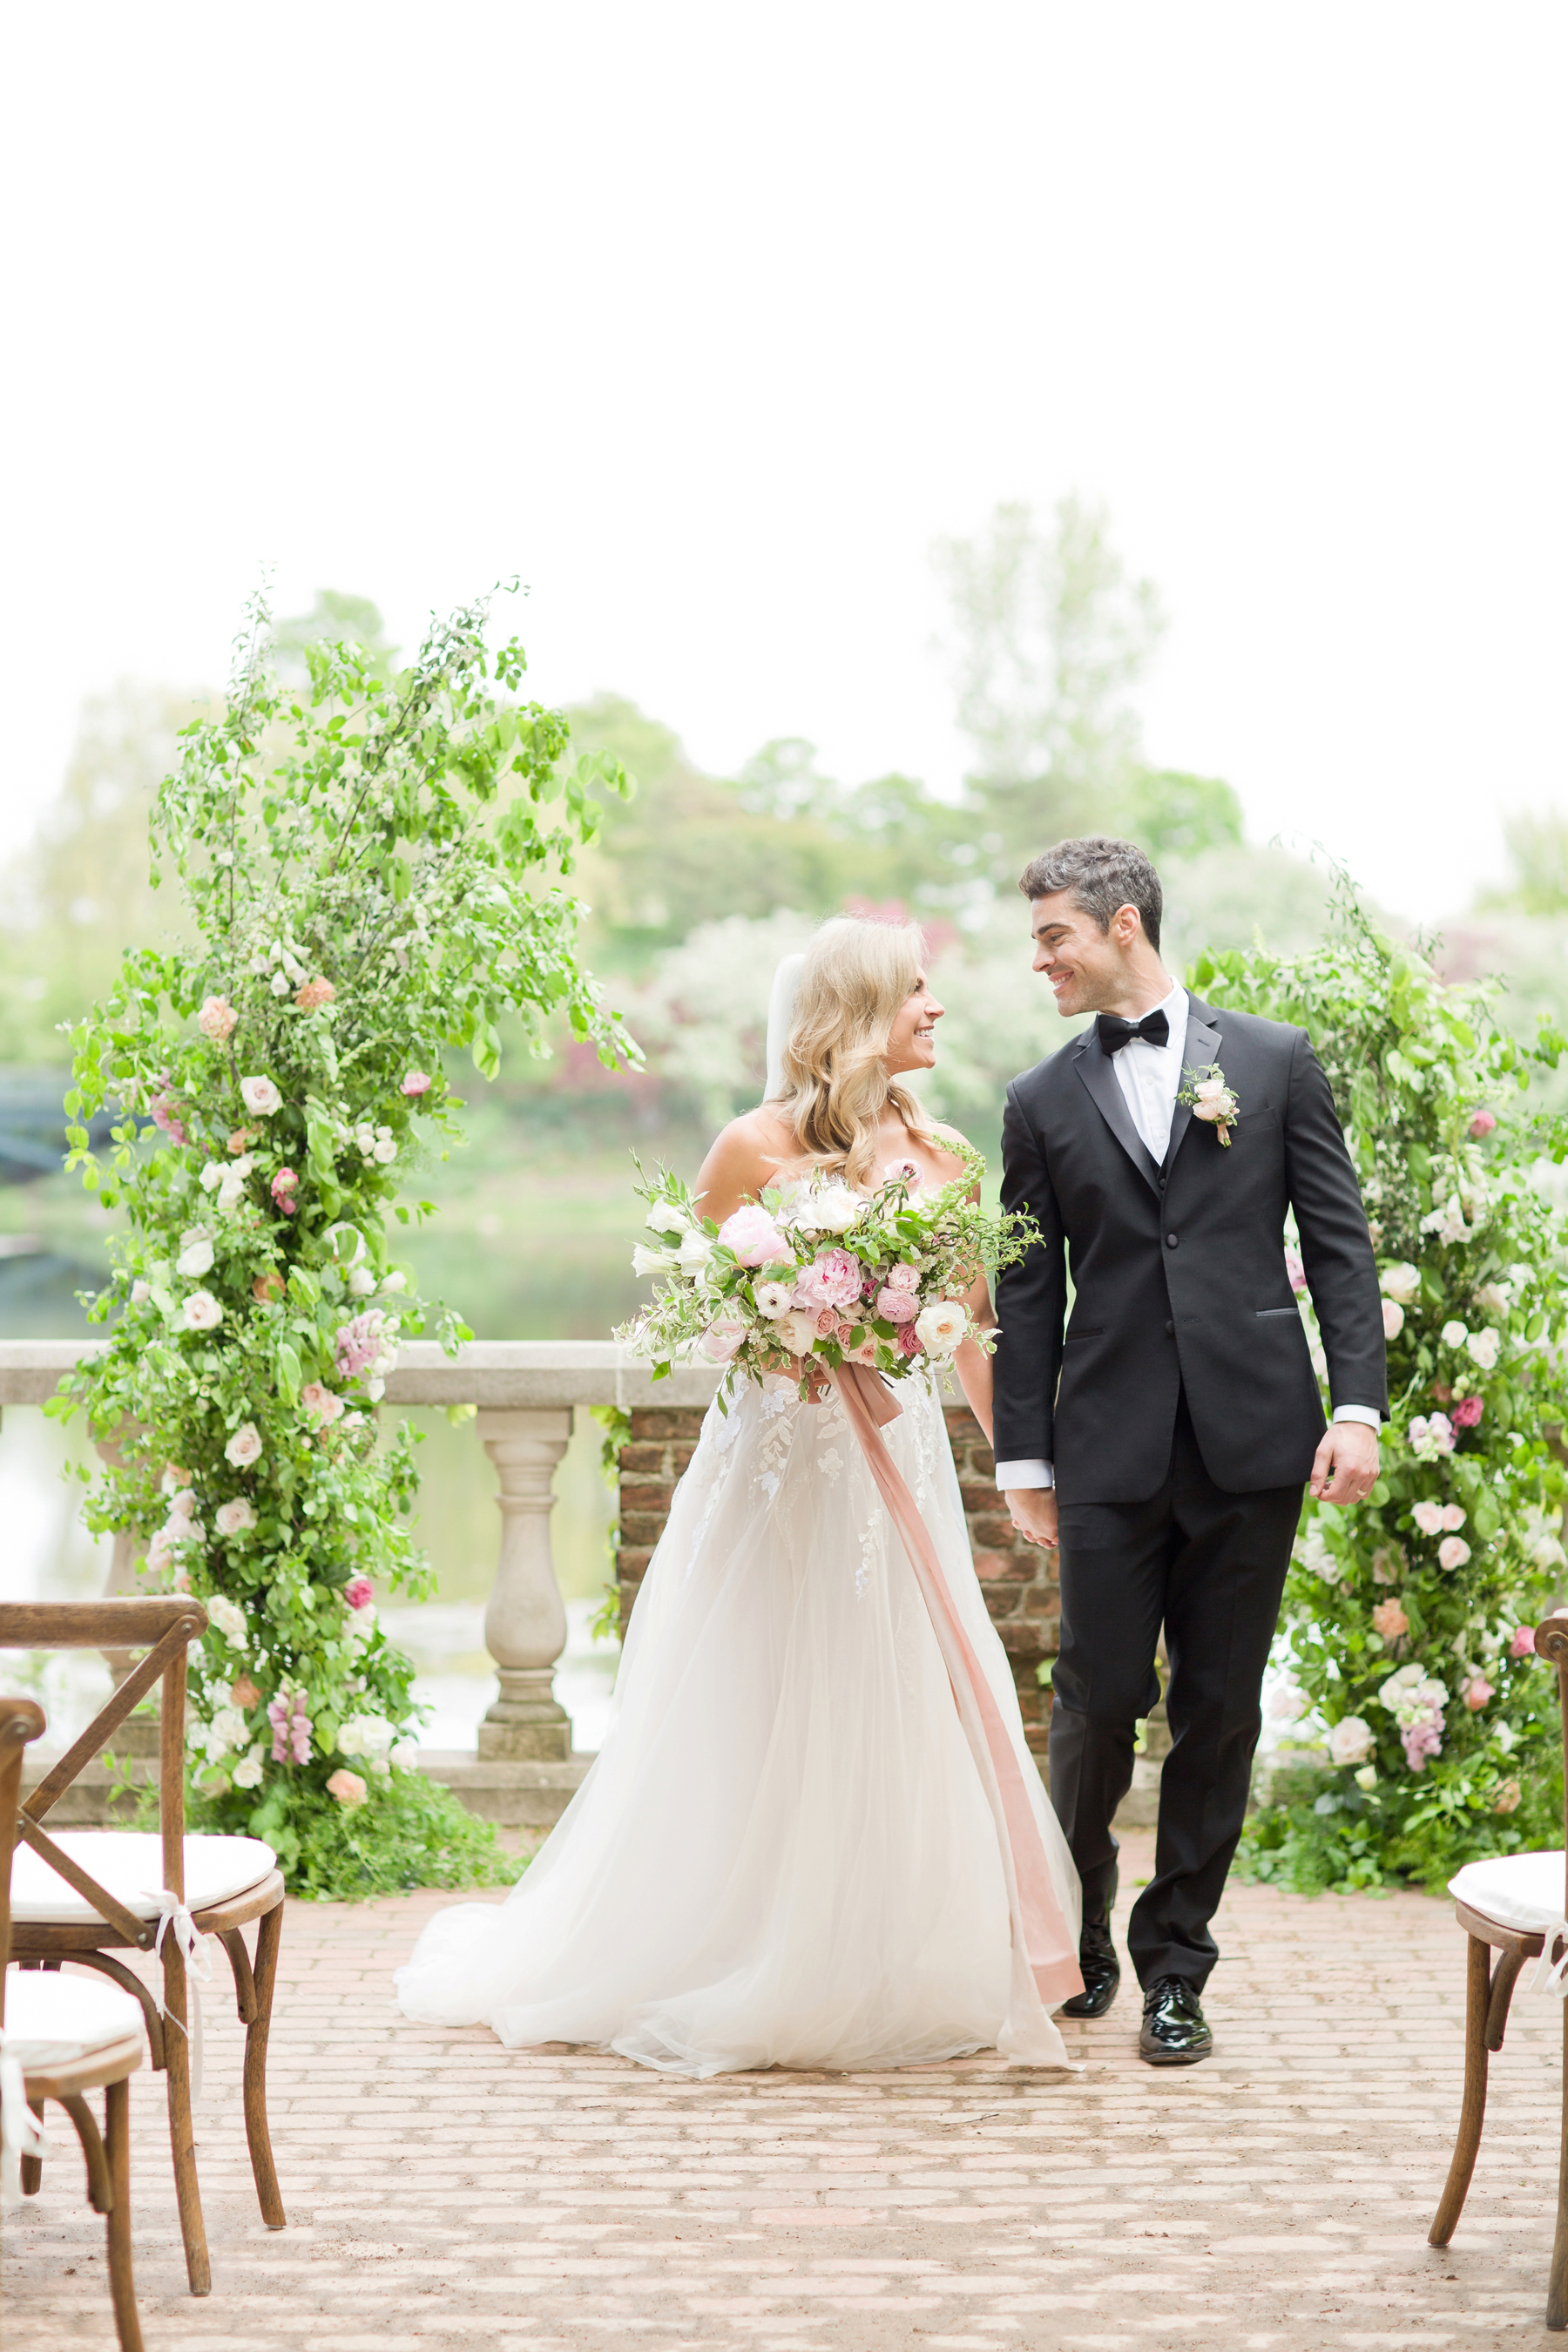 Chicago Botanic Garden Romantic Wedding Inspiration (12)